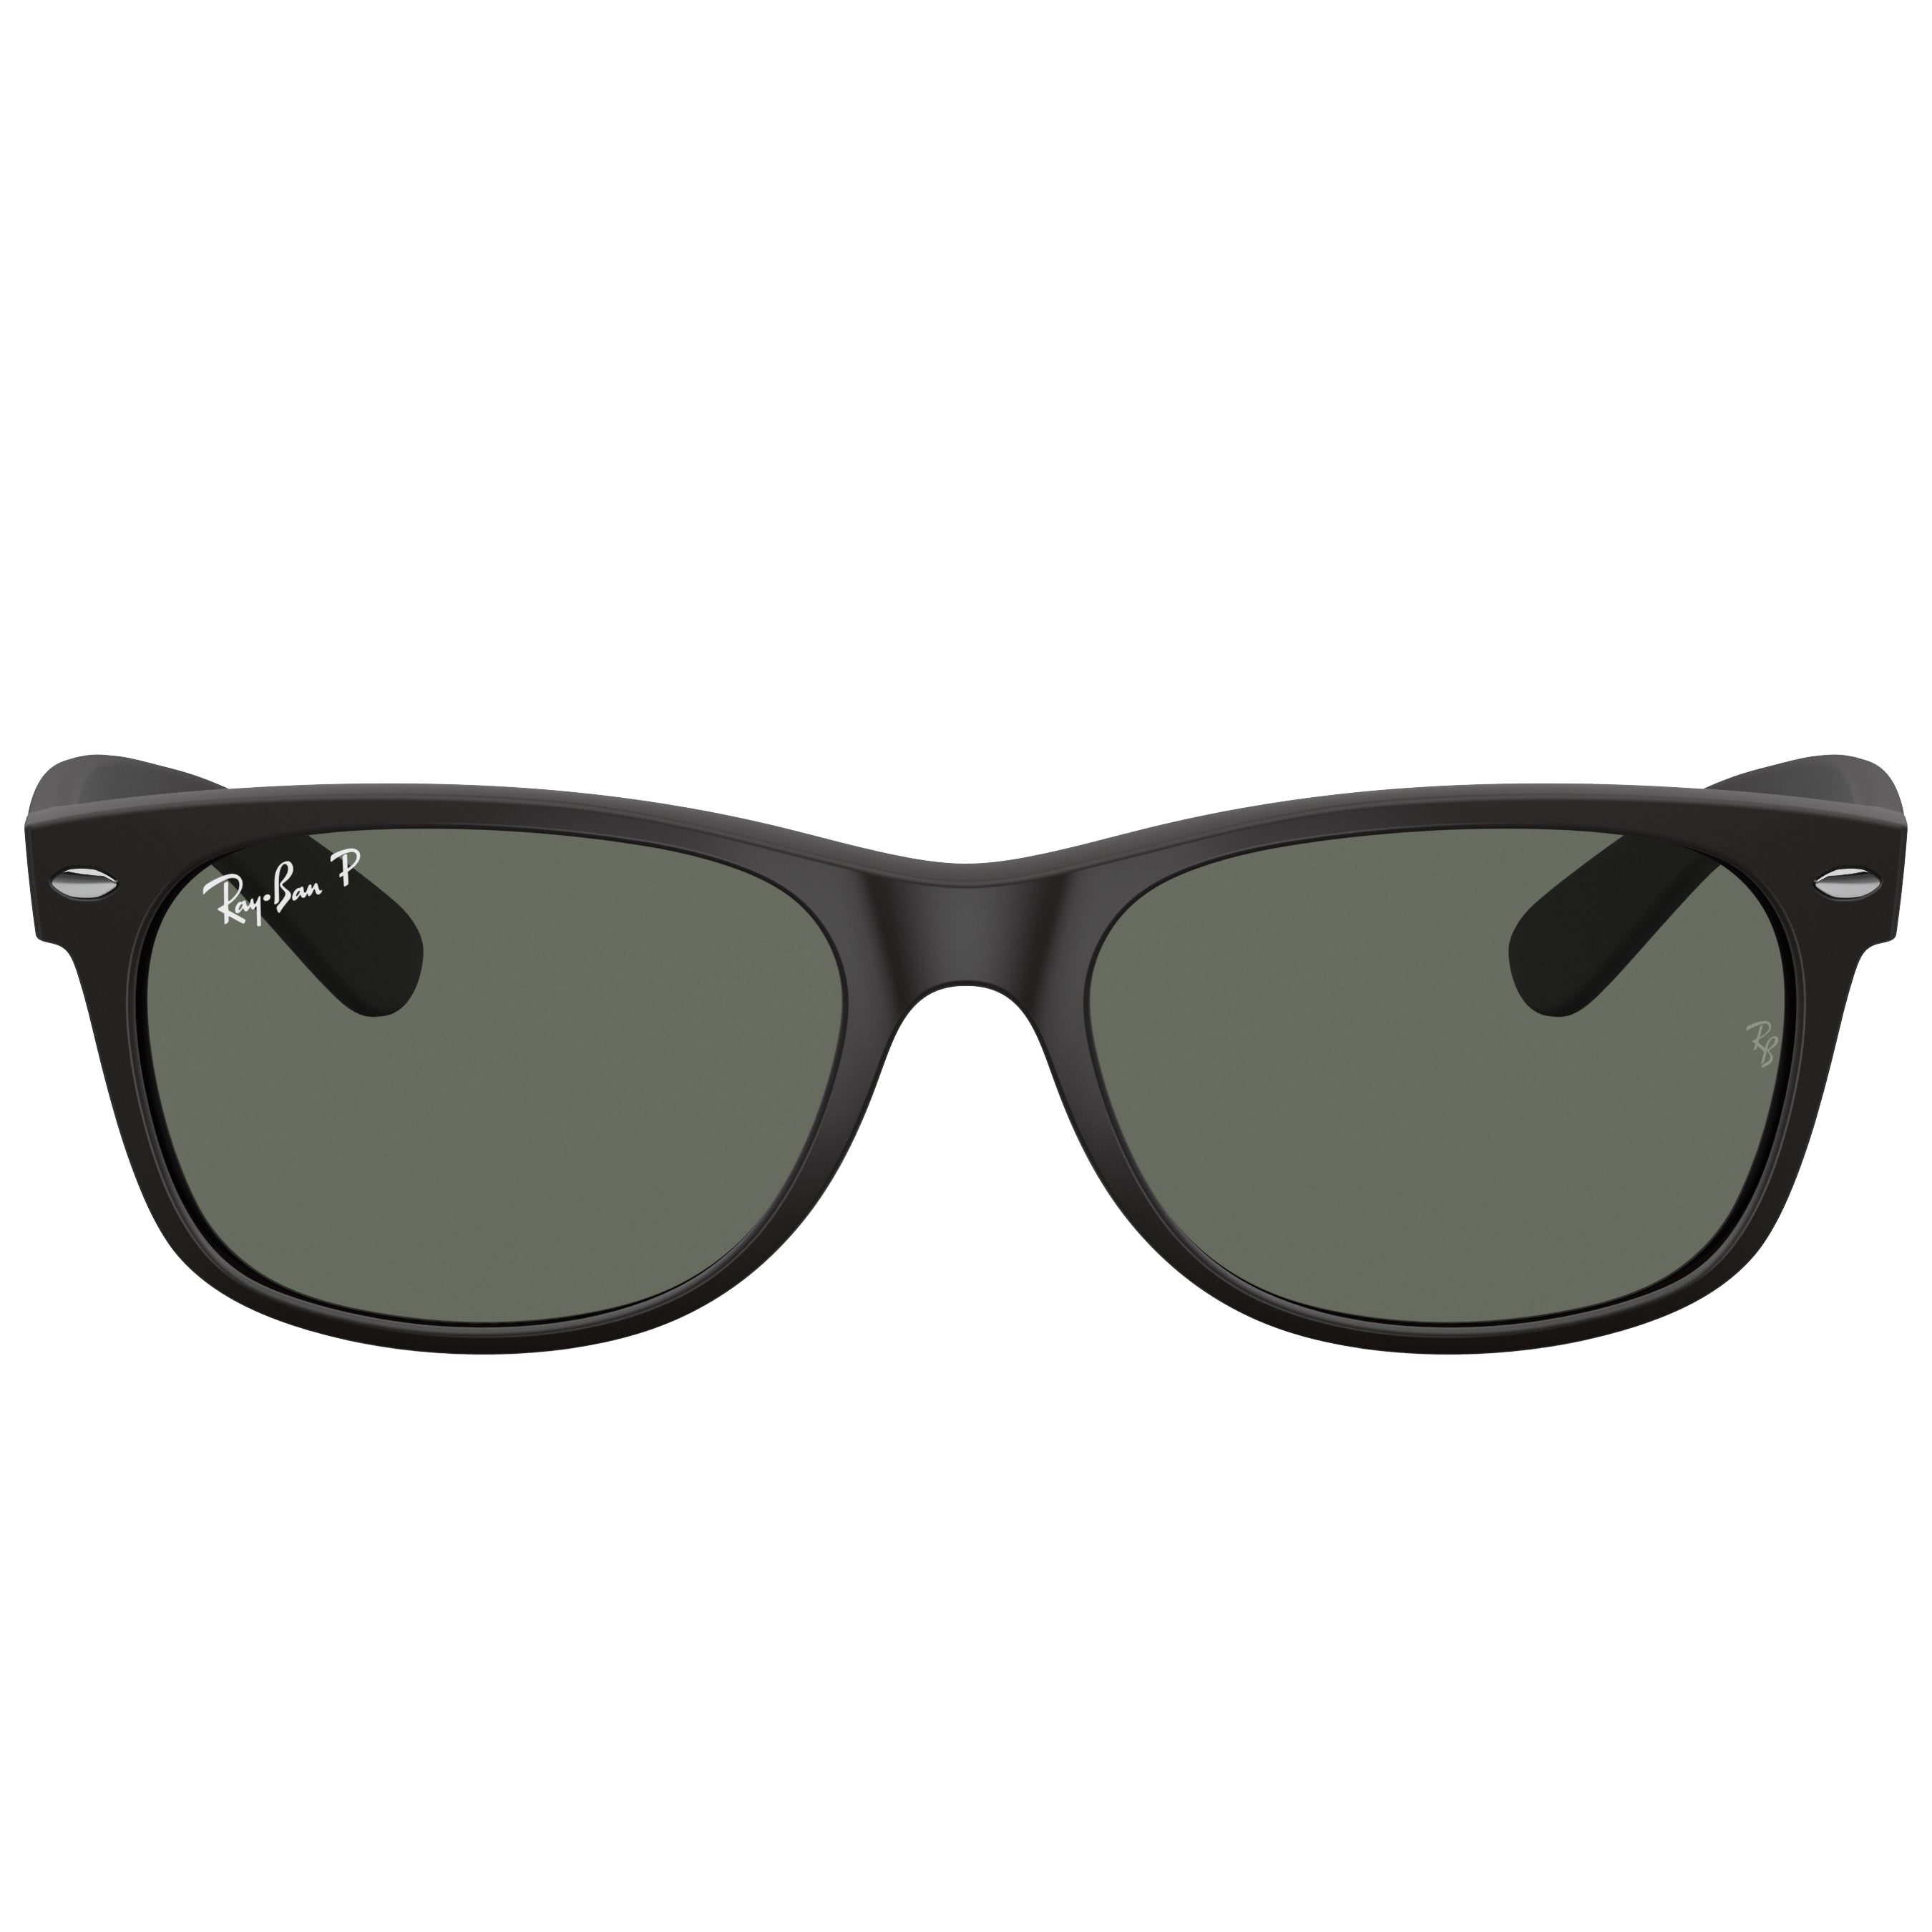 Ray-Ban New Wayfarer Green Polarized Polarized Wayfarer Men's Sunglasses RB2132 622/58 55